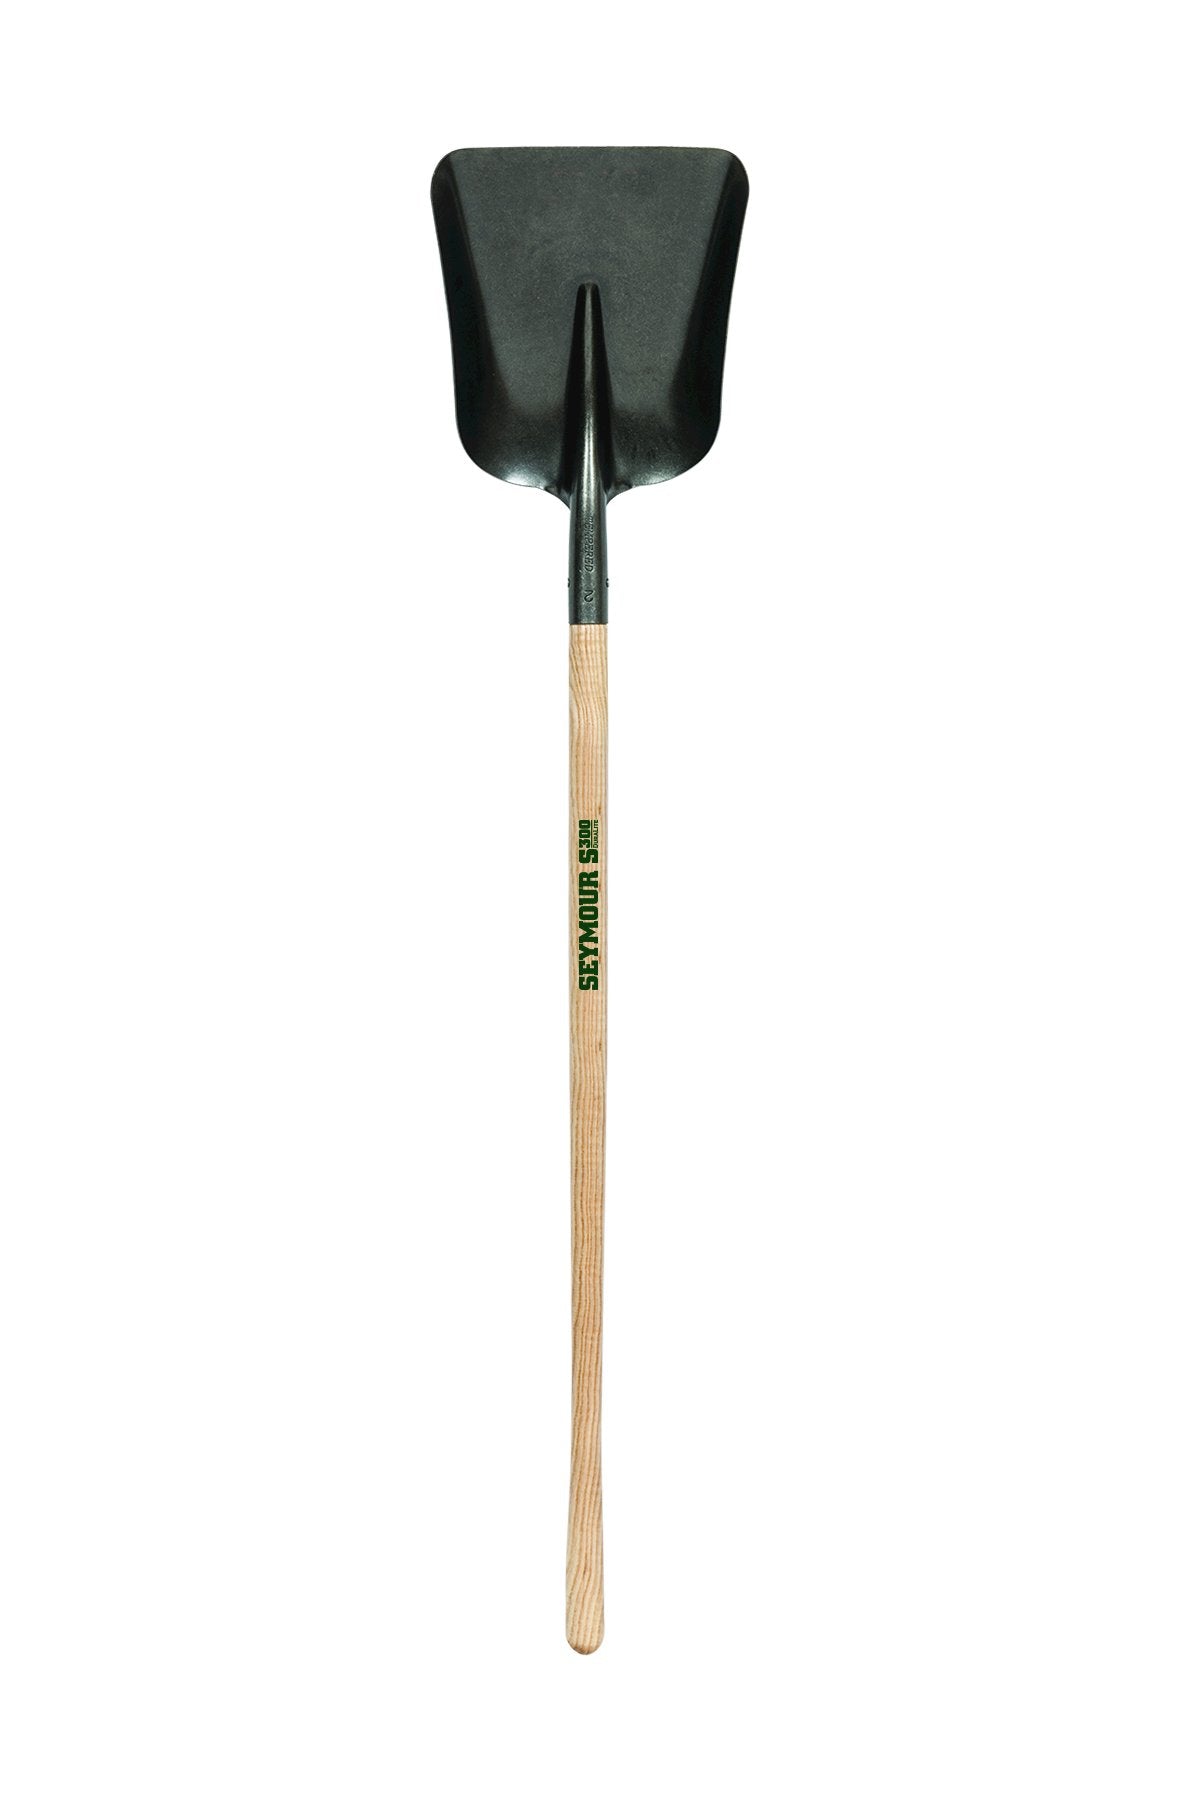 Asphalt Shovel - Steel Head #2 Scoop Shovel Wood Handle - 57in Long